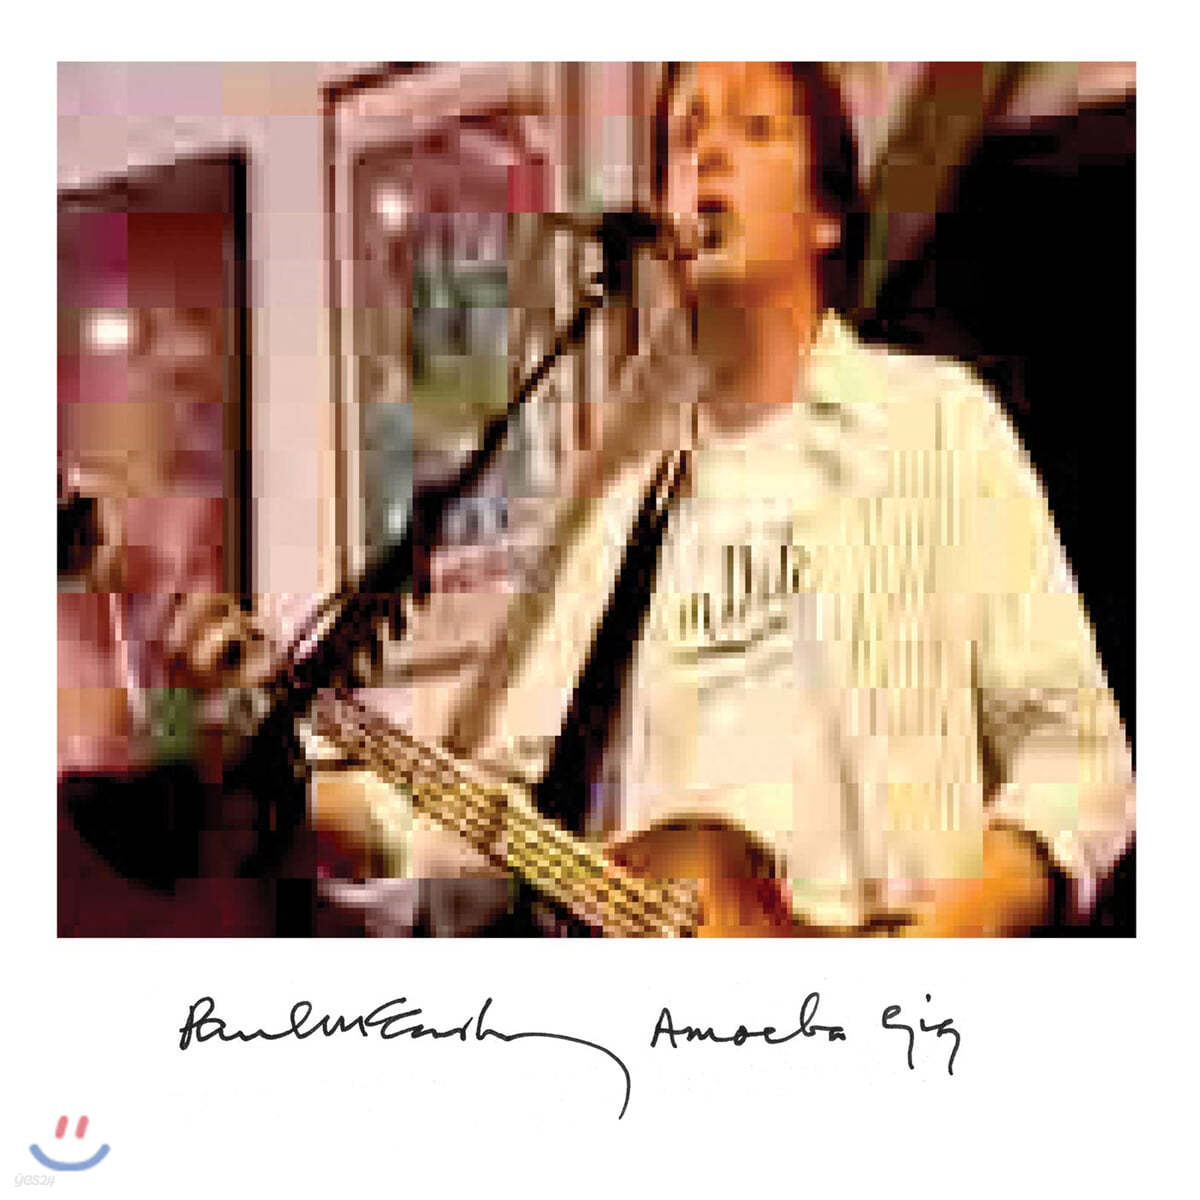 Paul McCartney - Amoeba Gig 폴 매카트니 2007년 아메바 음악 레코드샵 공연 실황